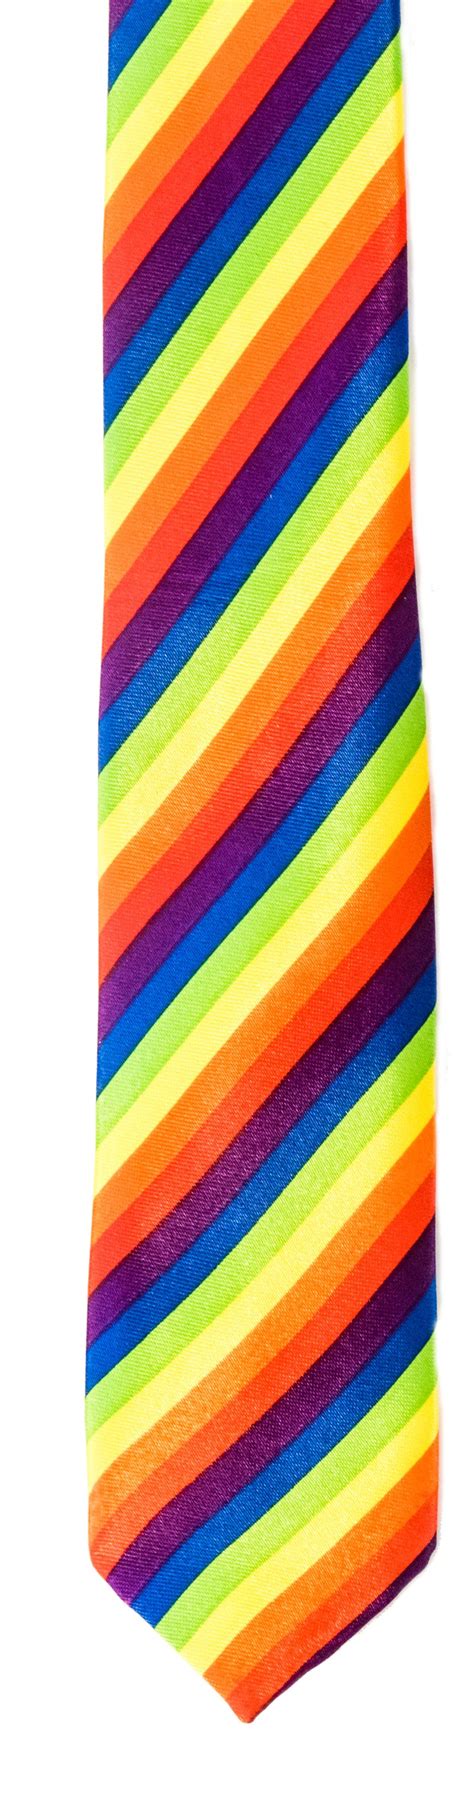 rainbow tie qx shop